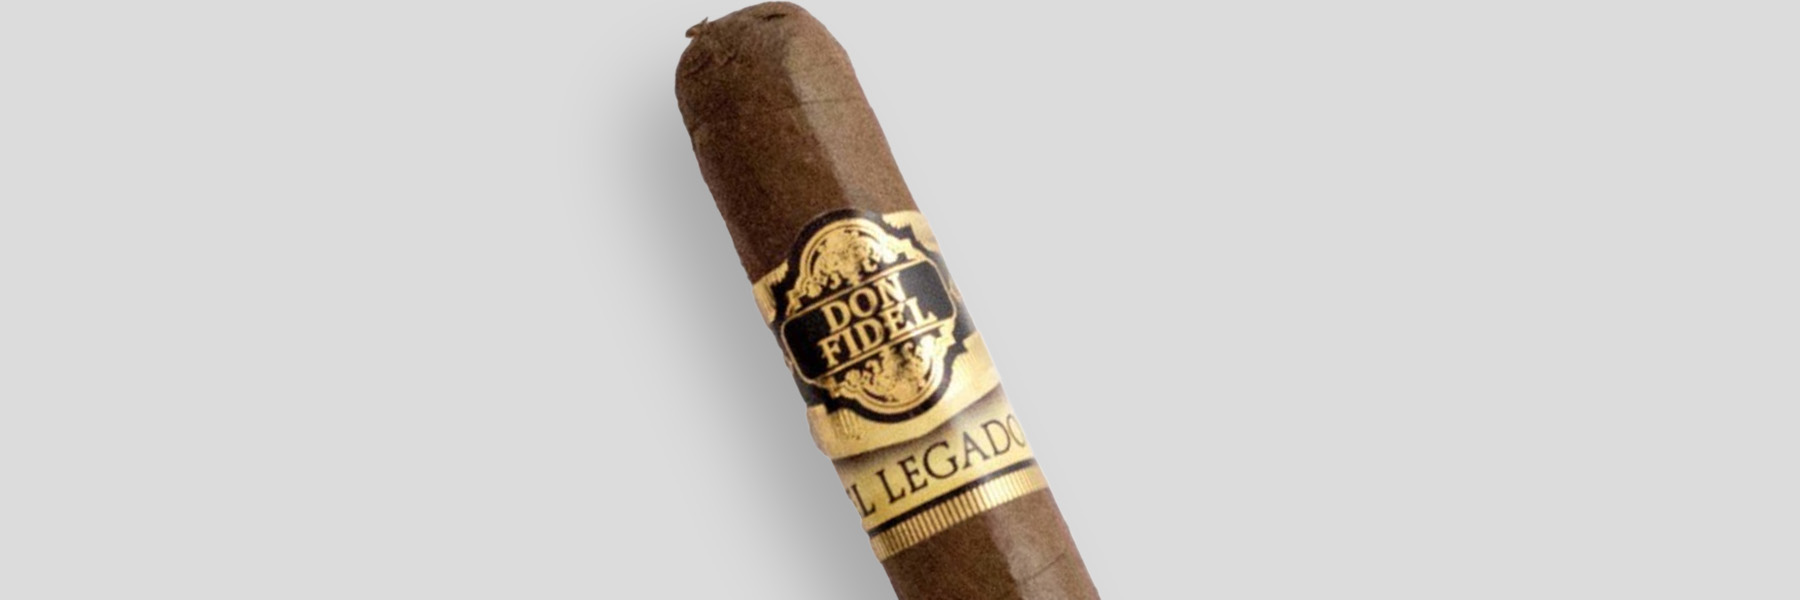 Don Fidel Cigars